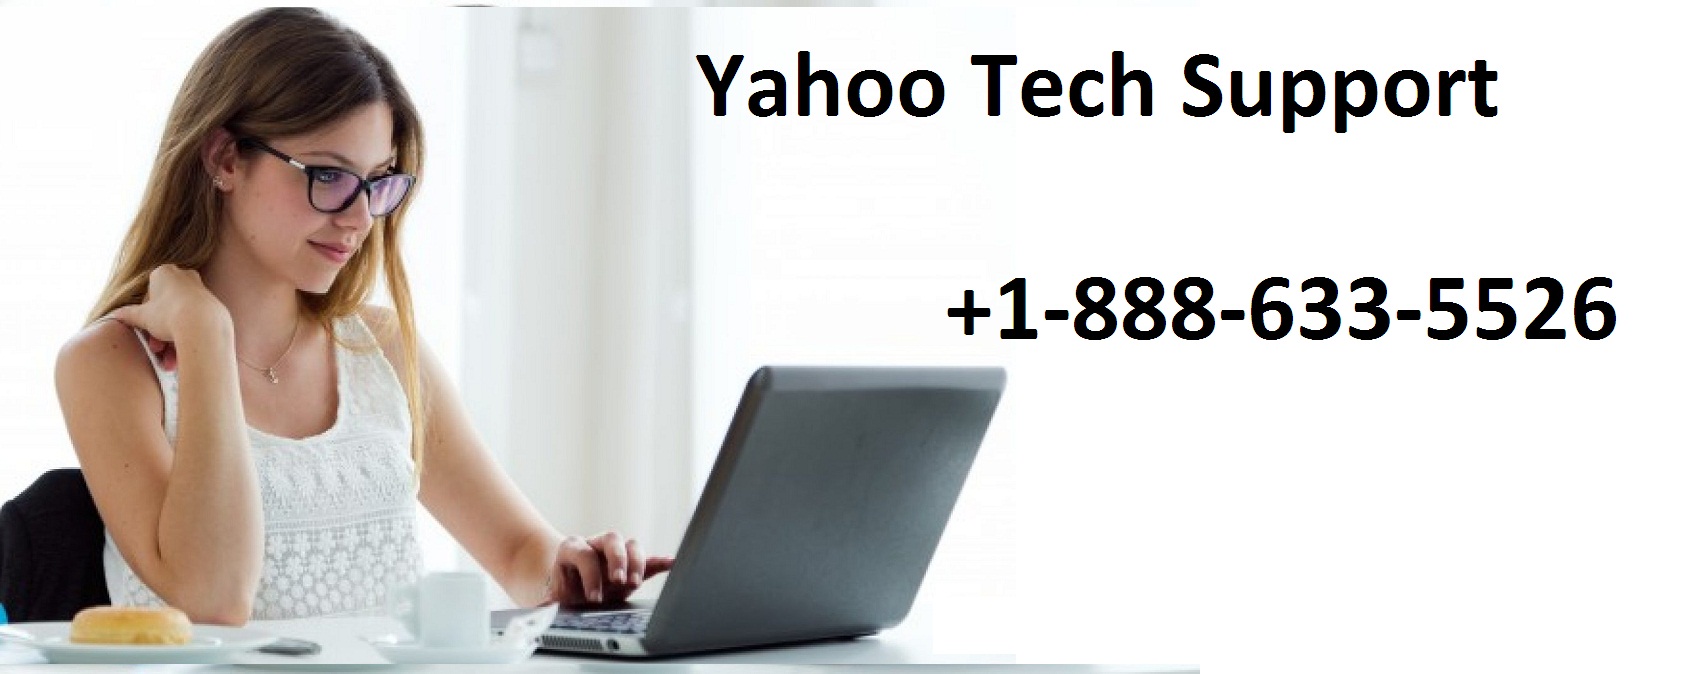 Yahoo Tech Support +1-888 633 5526 - Yahoo! Customer Service Number